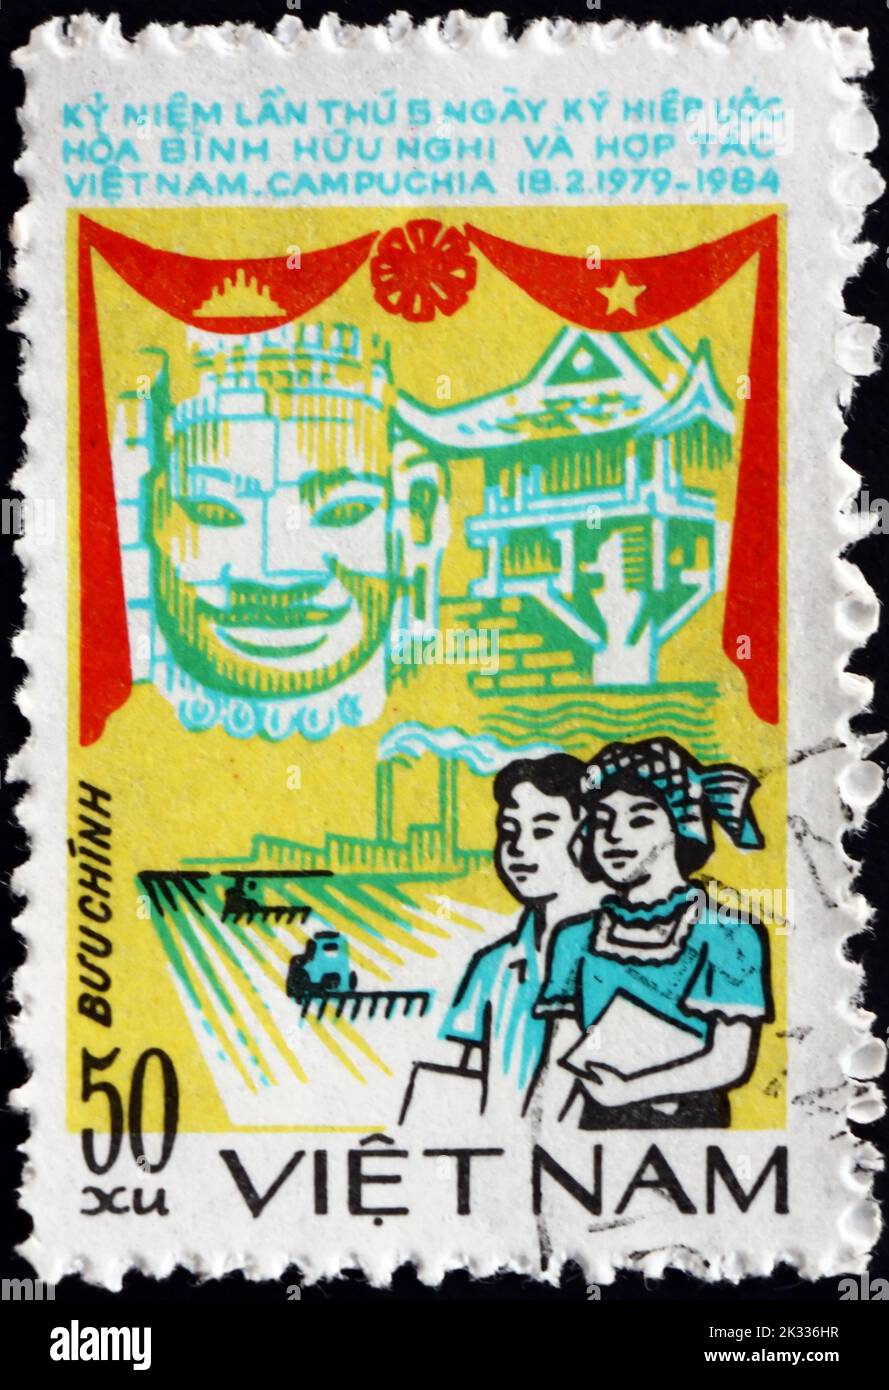 VIETNAM - CIRCA 1984: a stamp printed in Vietnam shows people, pagoda and statue, Vietnam-Cambodia friendship agreement, 5th anniversary, circa 1984 Stock Photo